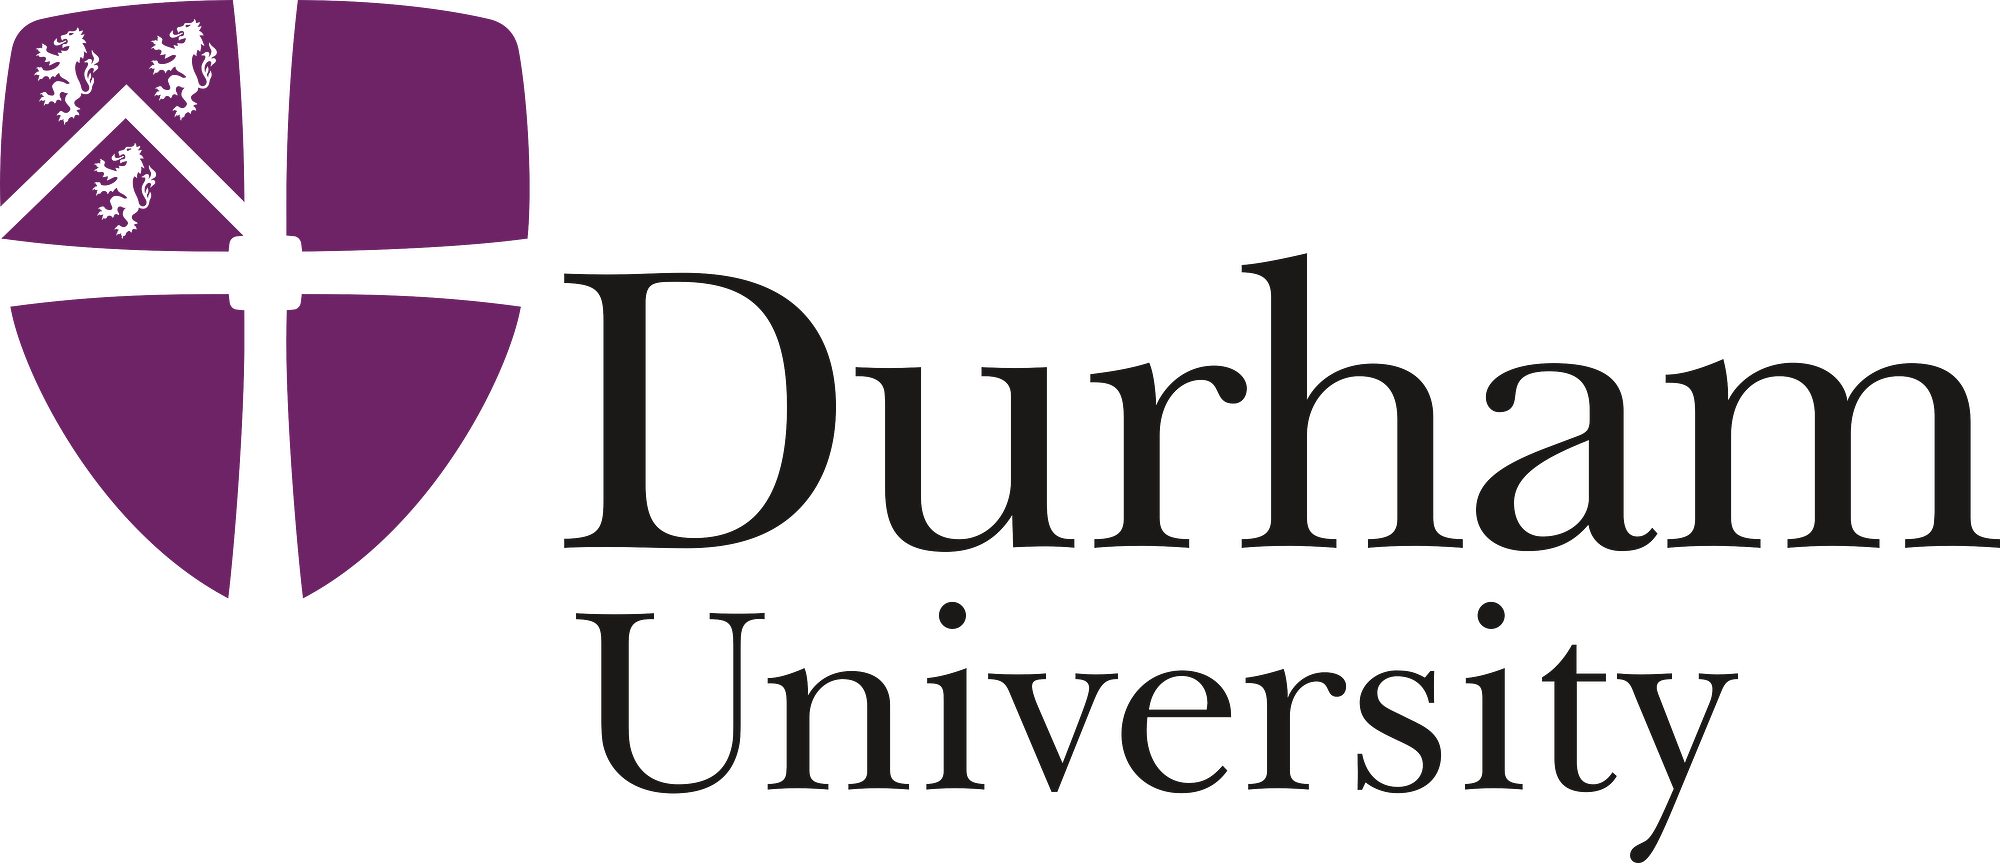 durham-university-logo